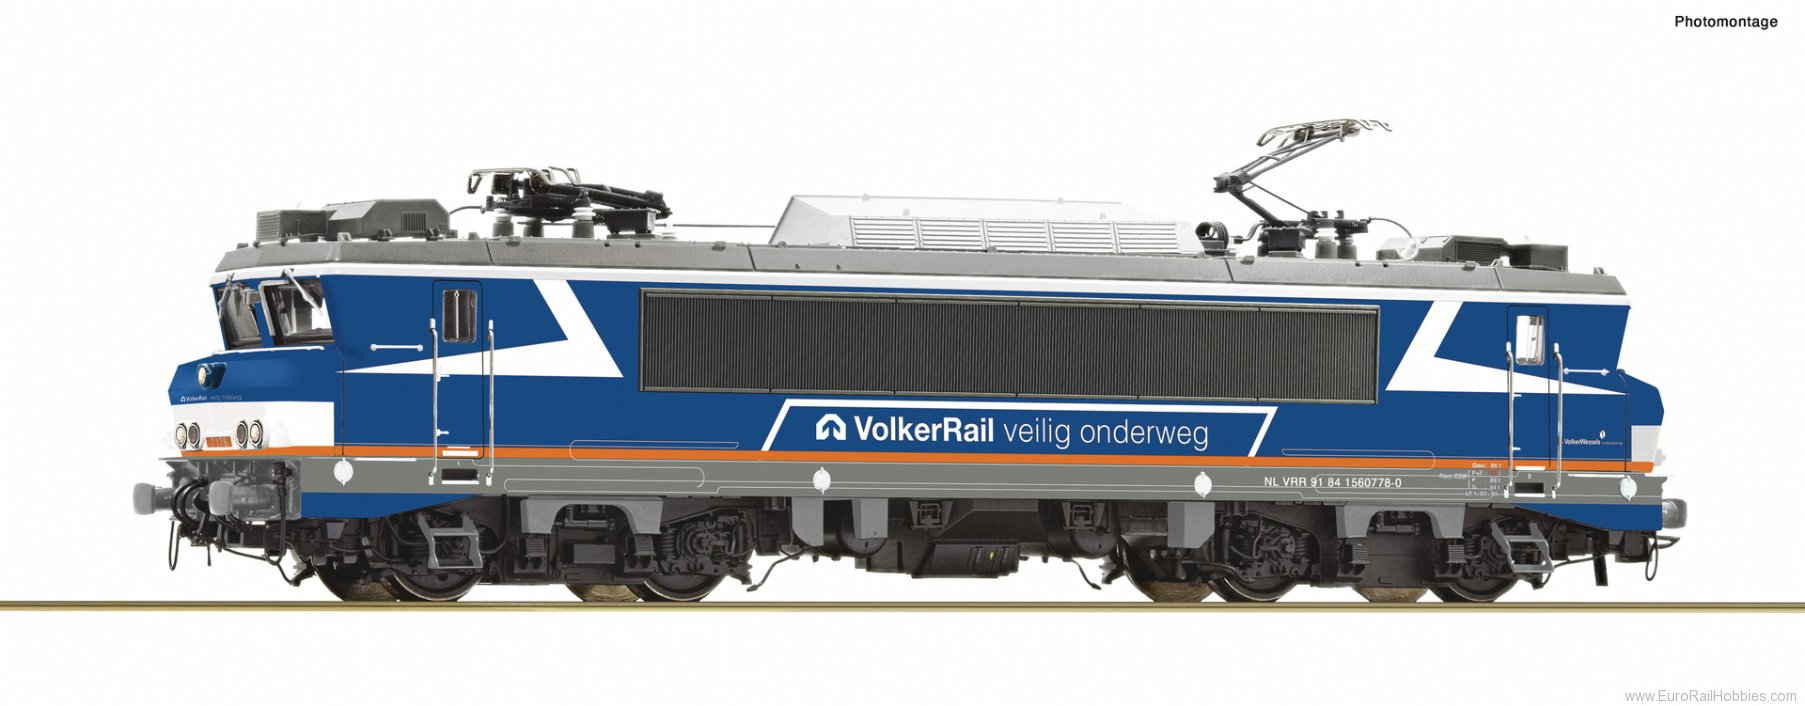 Roco 7500010 Electric locomotive 7178, VolkerRail (DC Anal